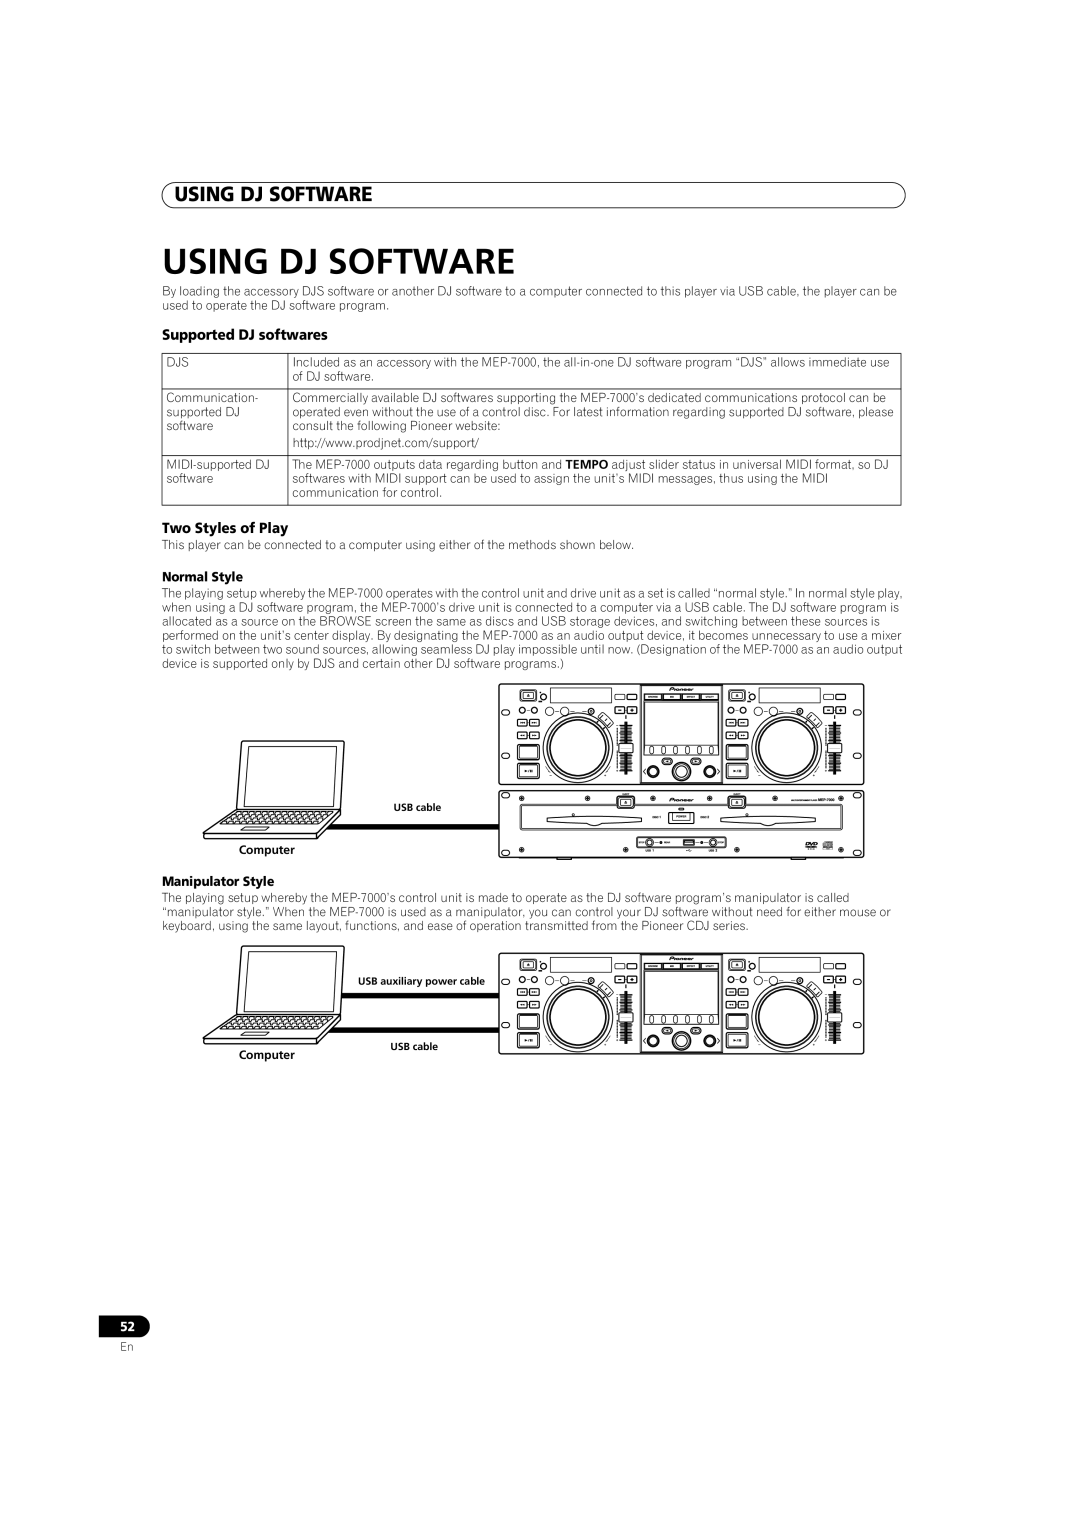 Pioneer MEP-7000 operating instructions Using Dj Software, Normal Style, Manipulator Style 